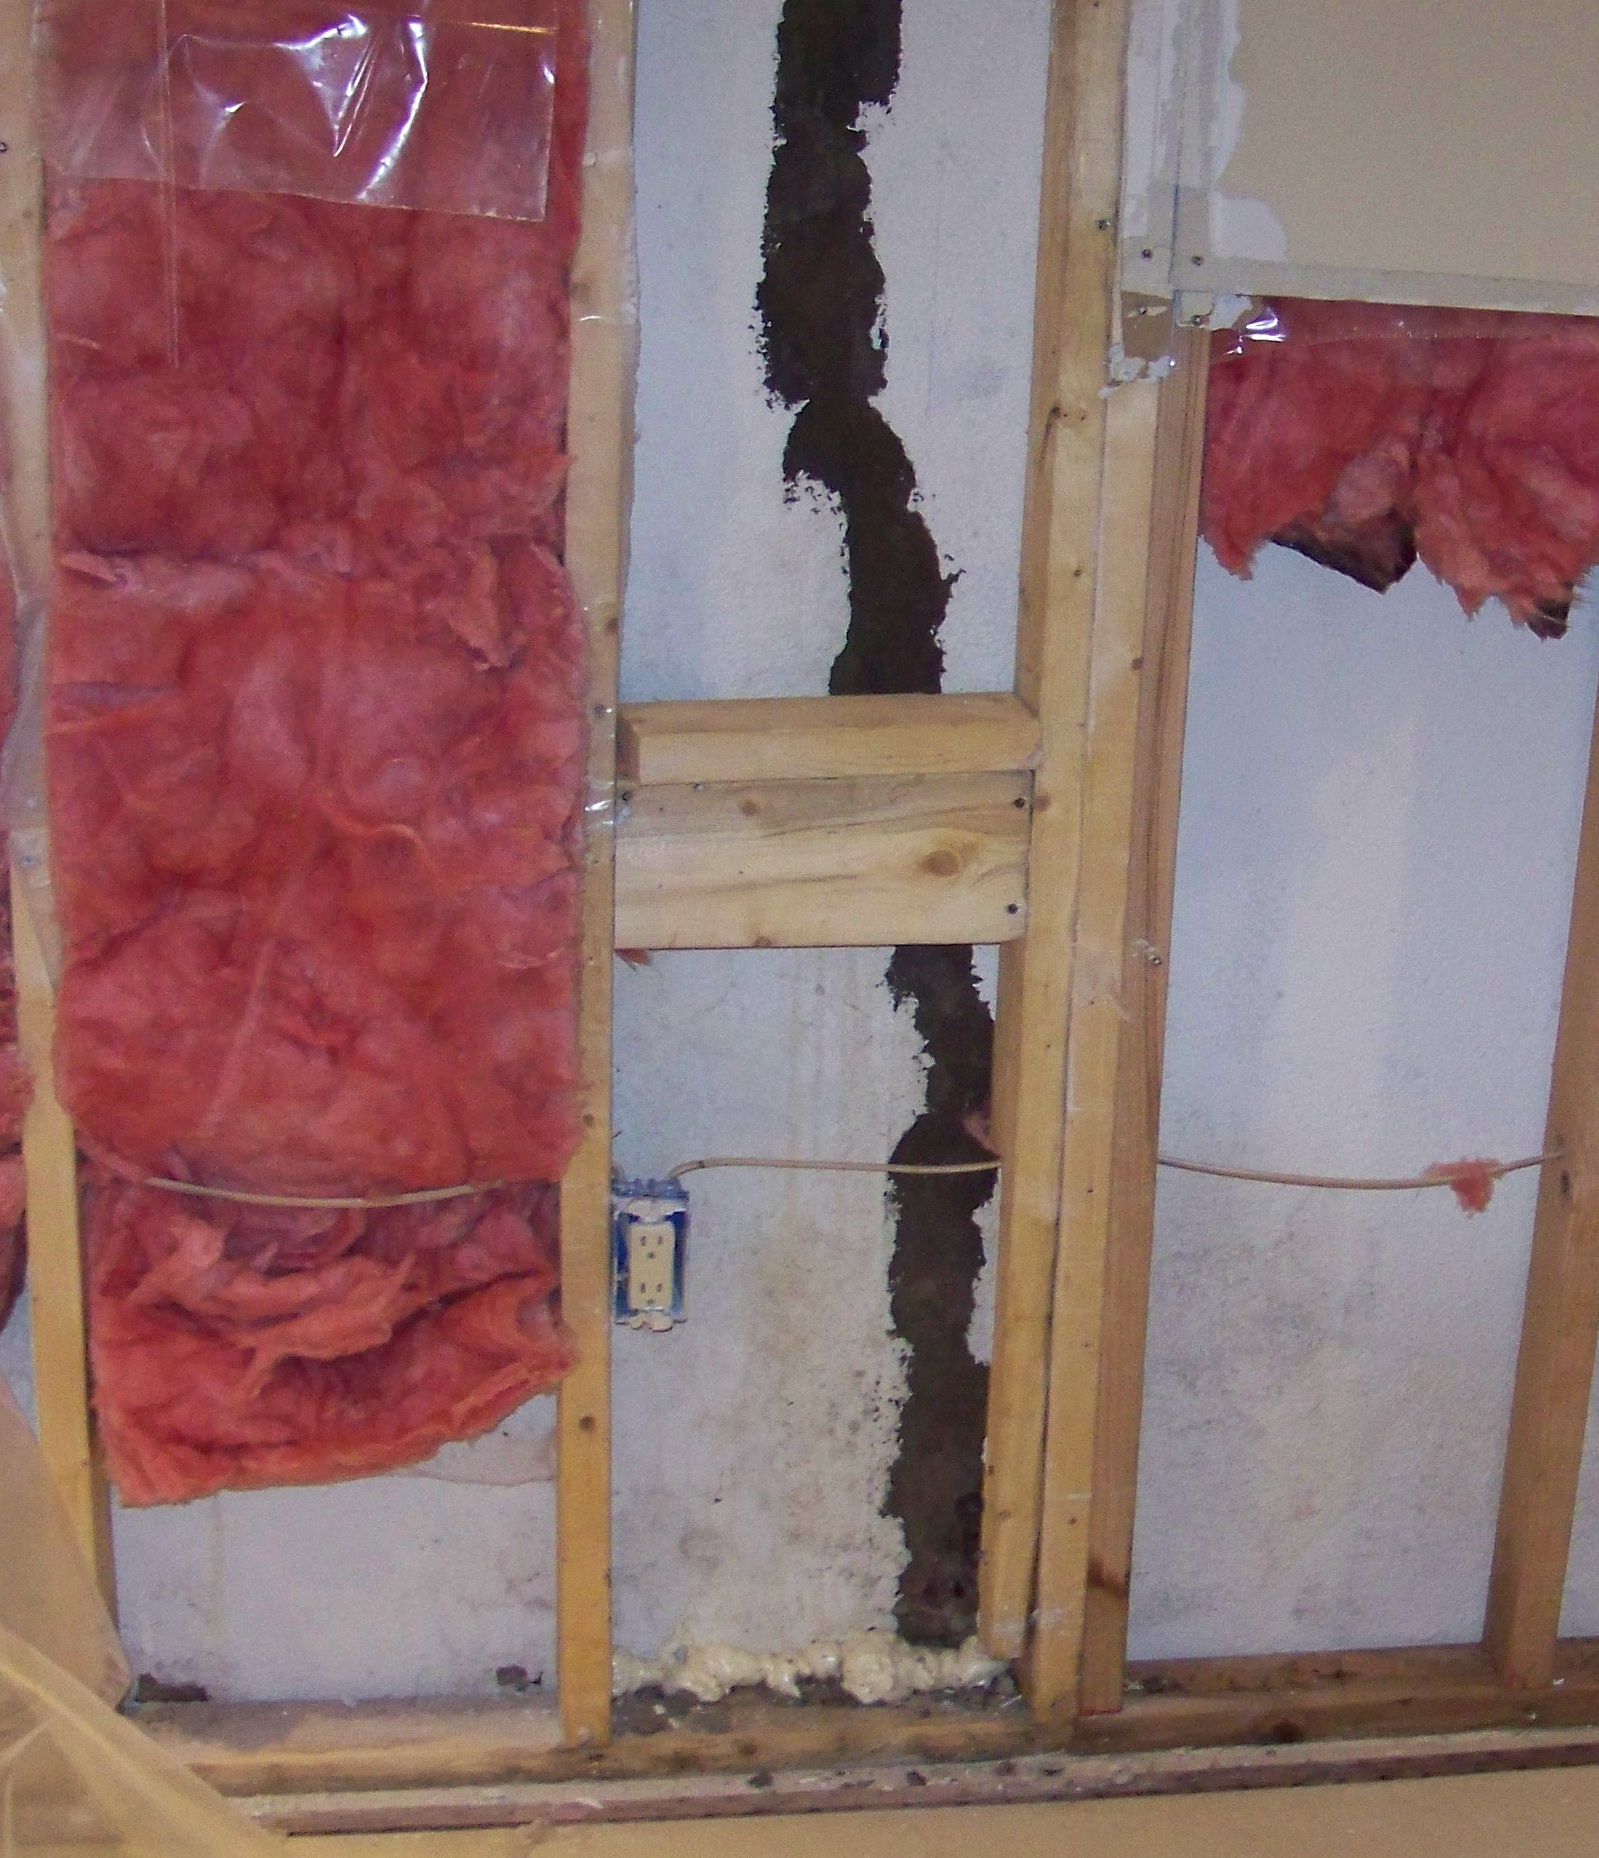 chimney leak, crack, wall crack, cracked wall, cracked basement wall, cracked poured basement wall, rod leaks